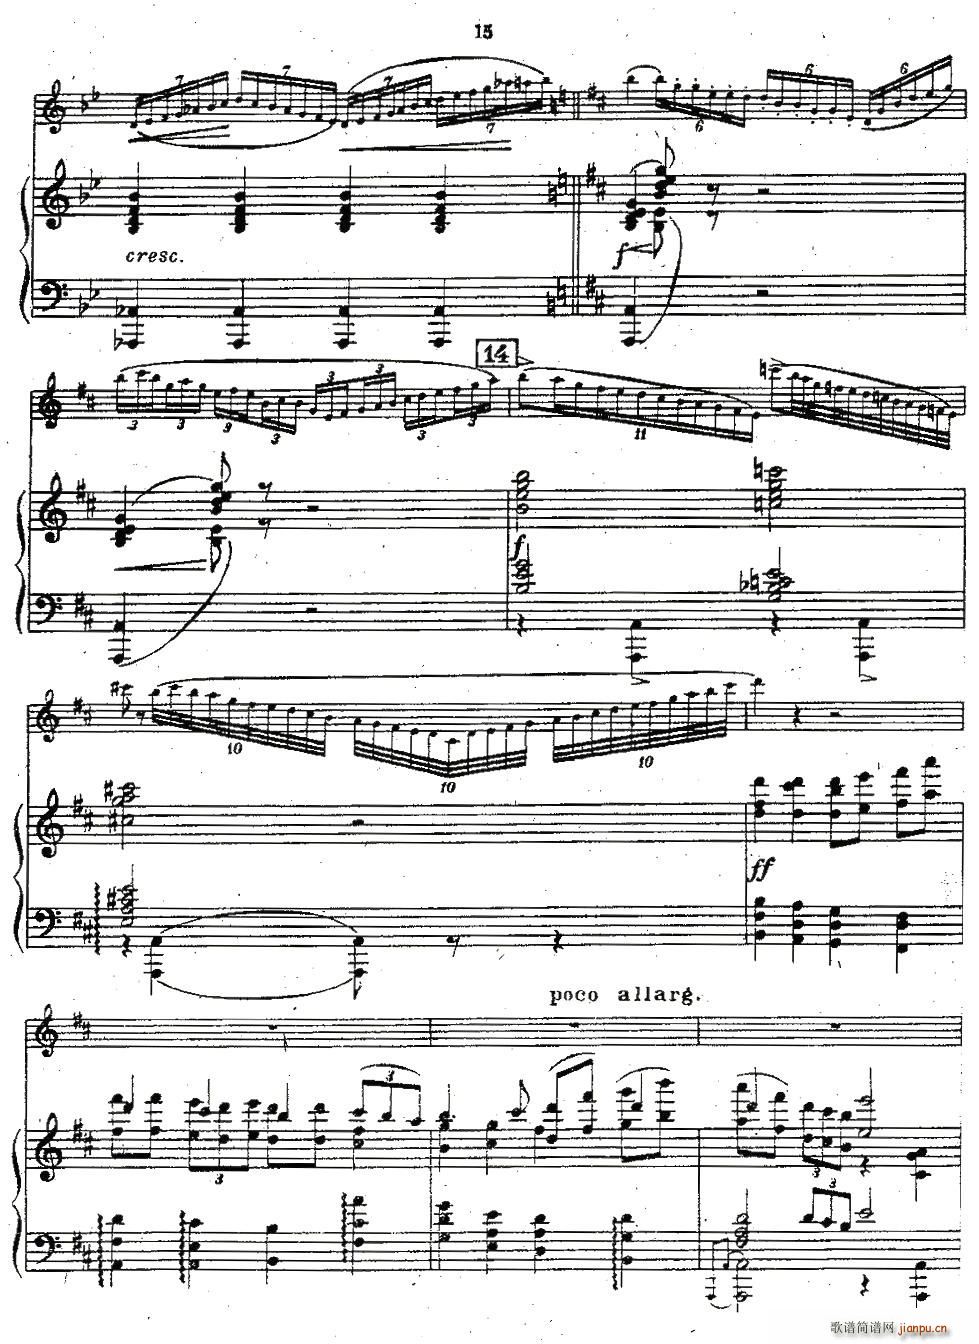 Chaminade Flute Concertino()14